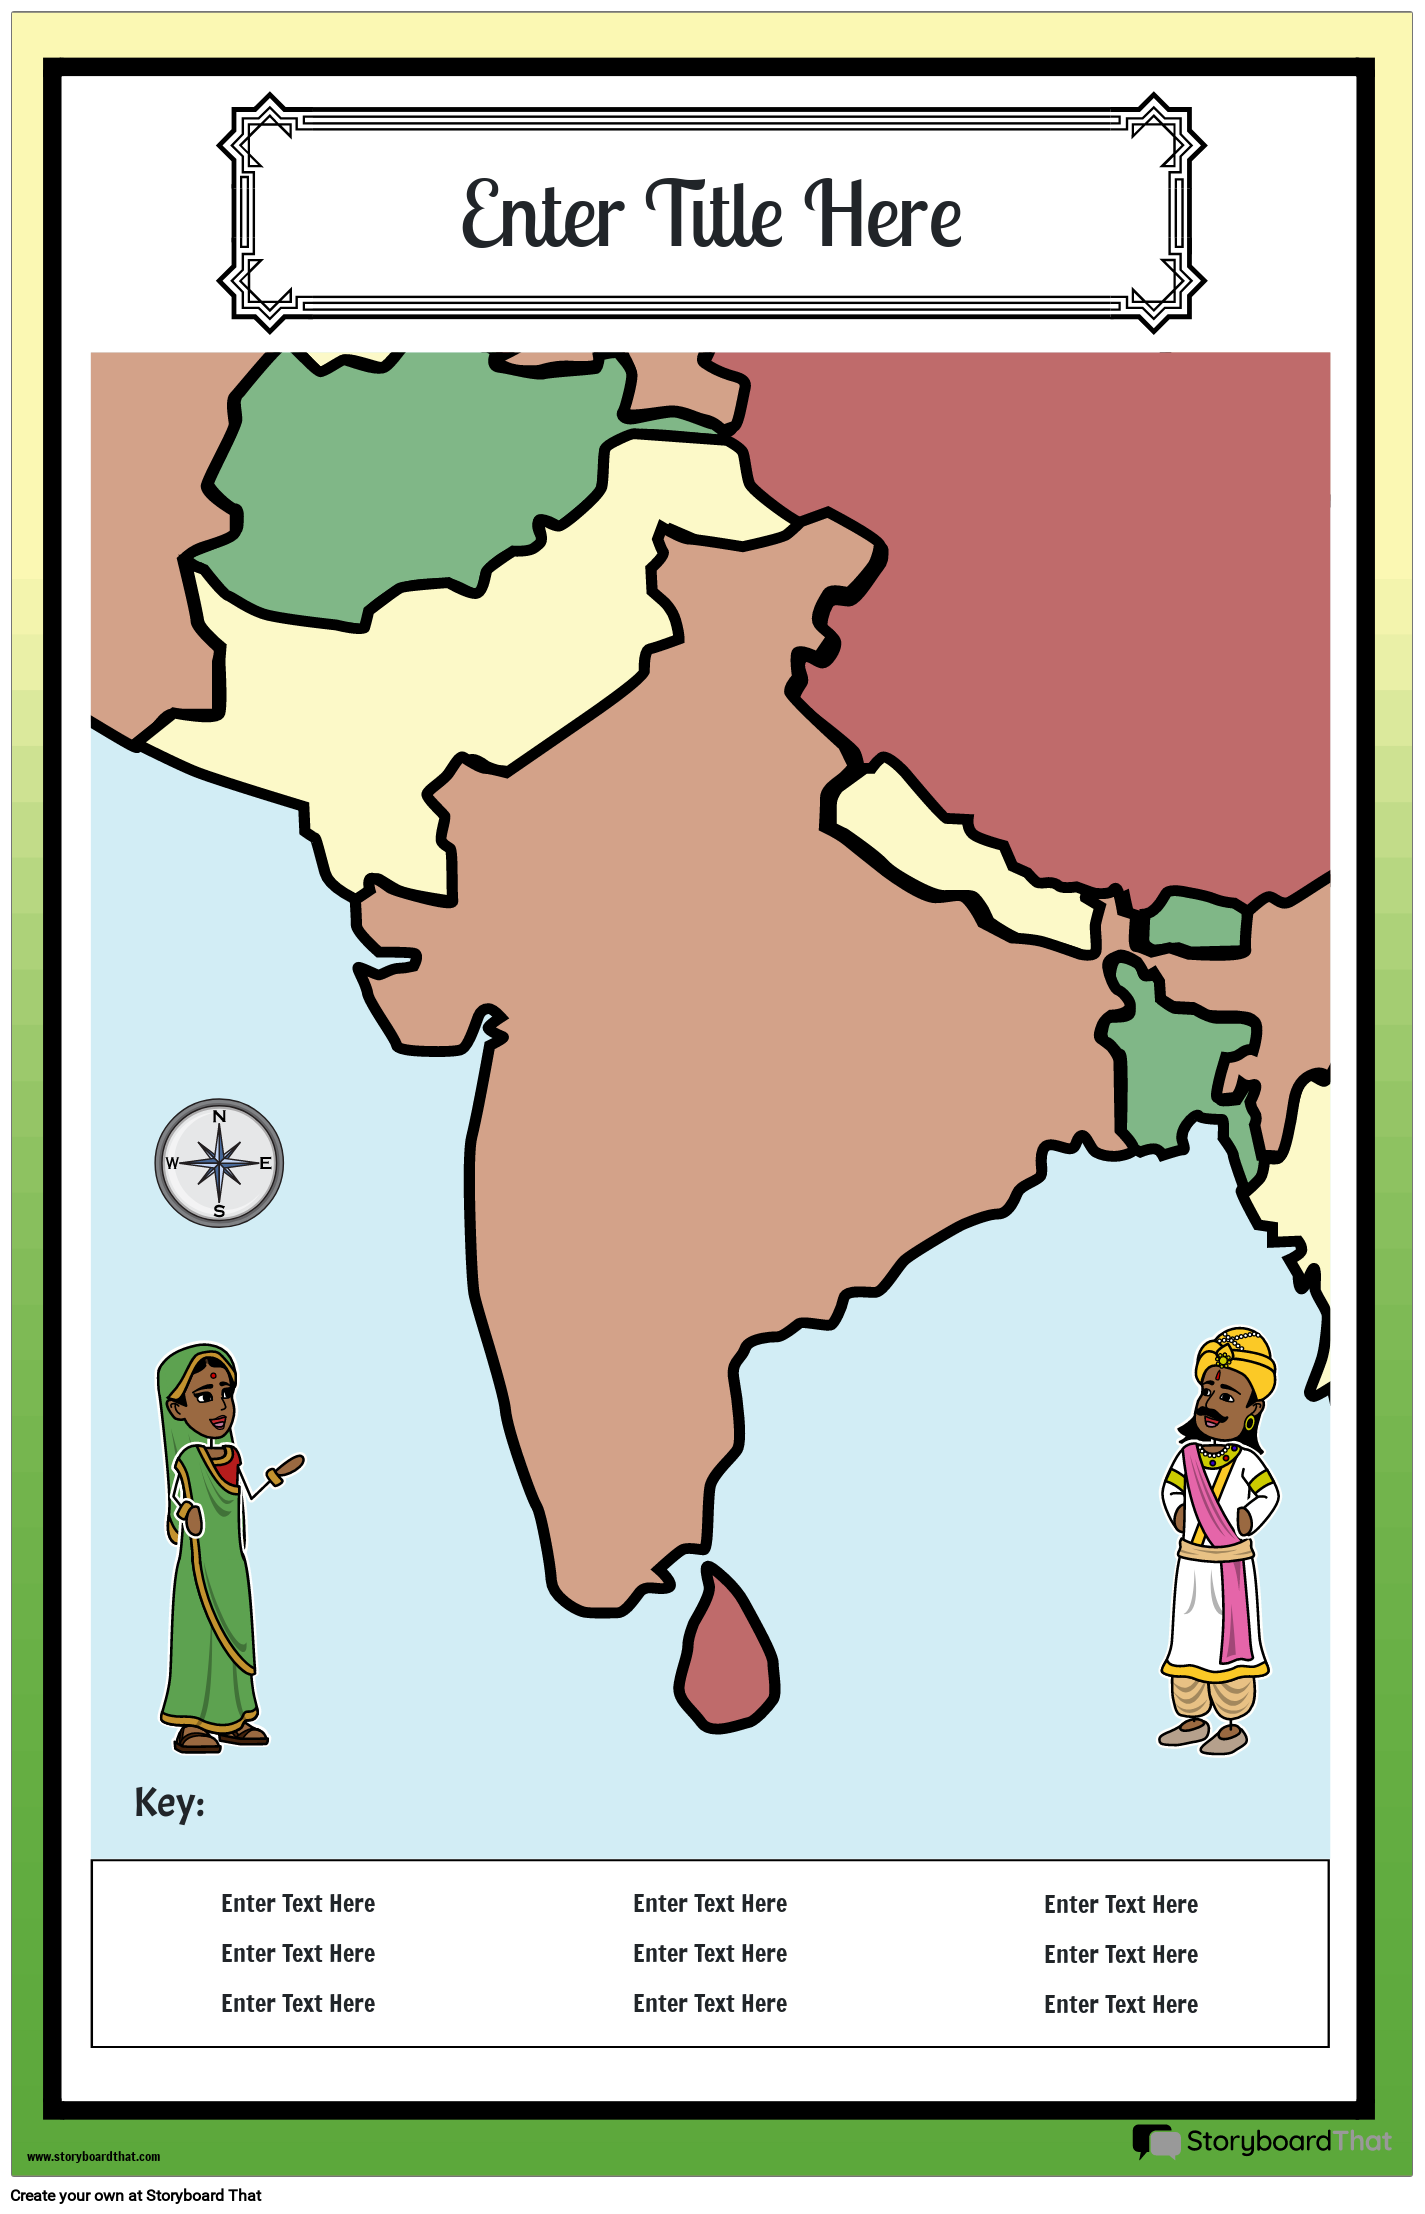 Kartenposter 27 Farbportrait Altes Indien